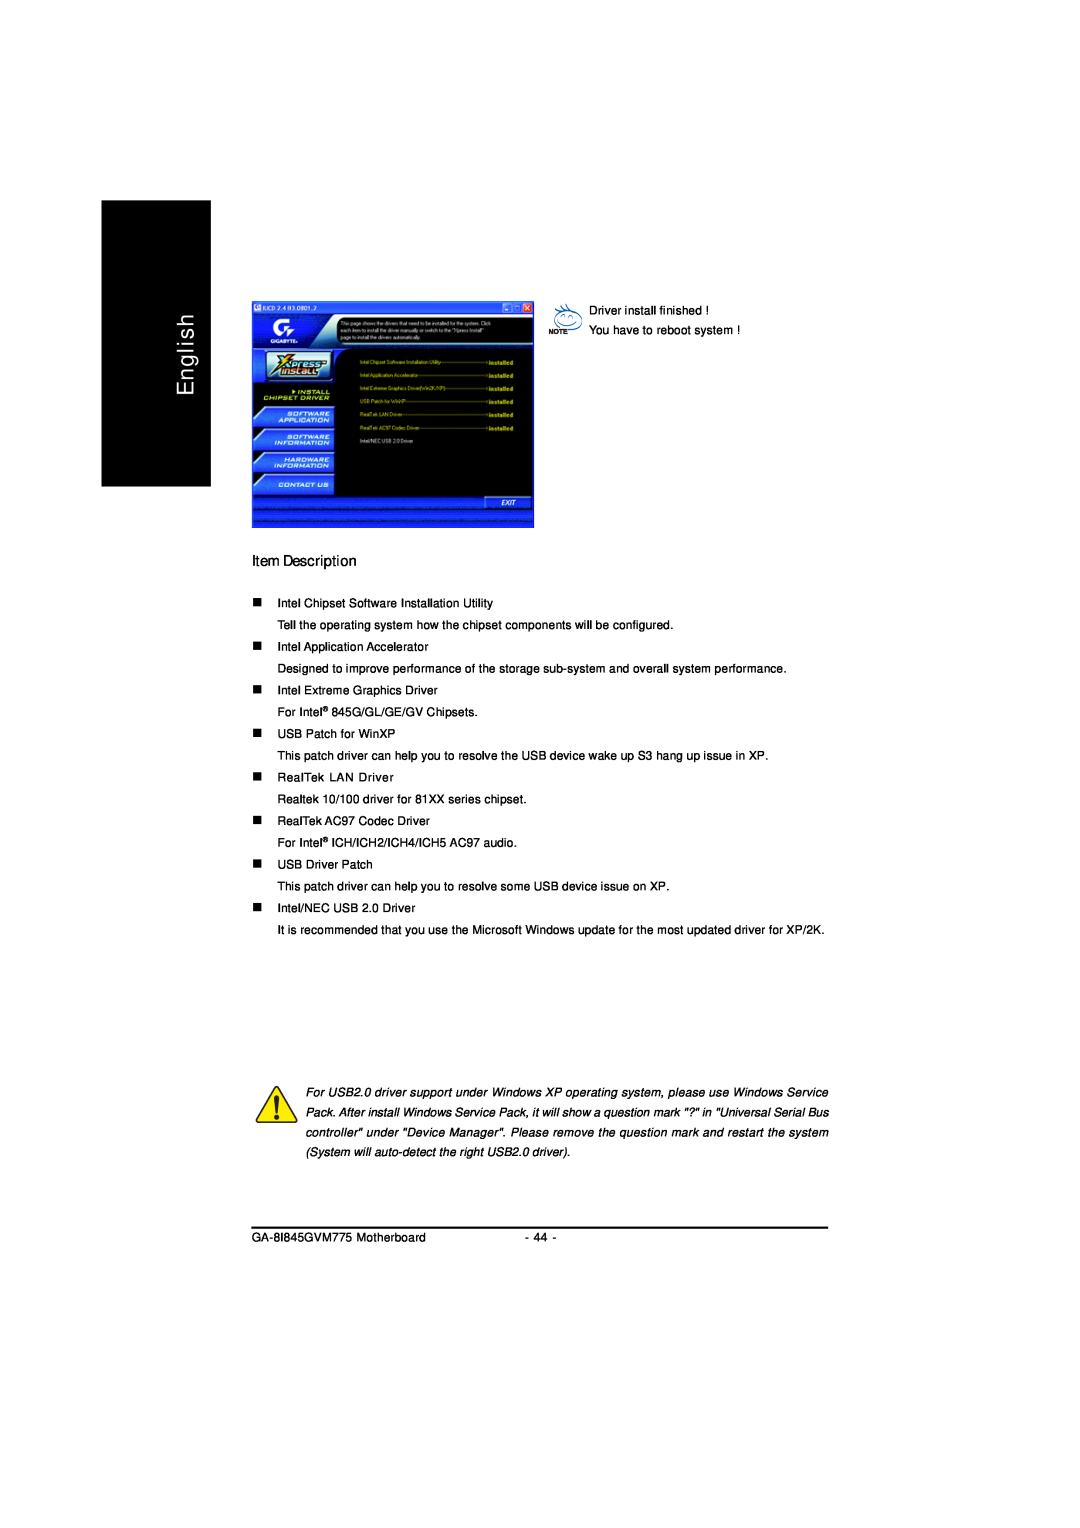 Gigabyte GA-8I845GVM775 user manual Item Description, English 